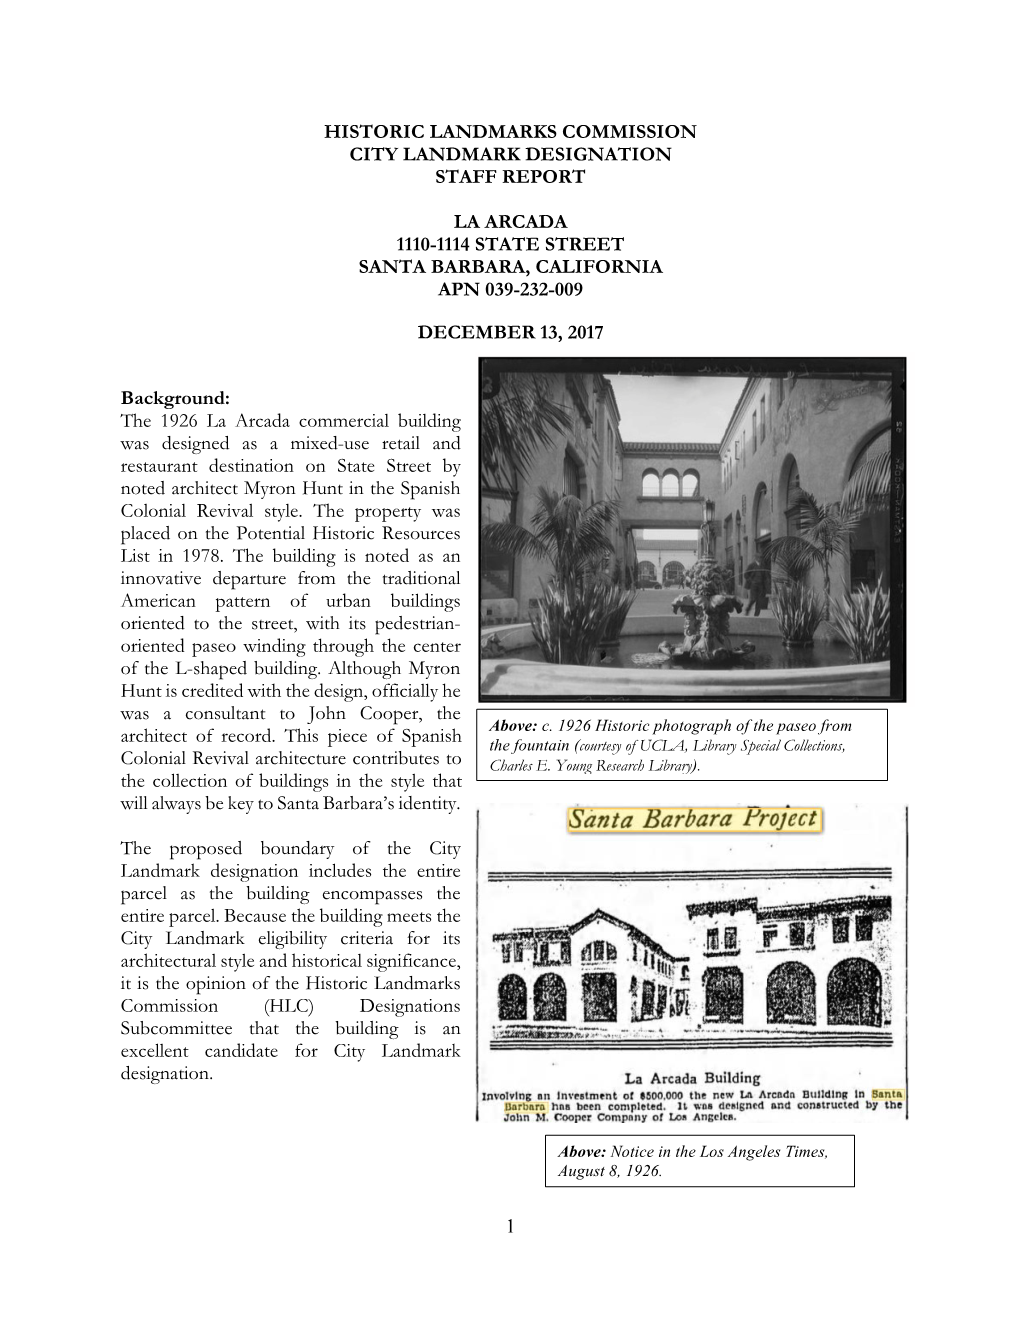 1 Historic Landmarks Commission City Landmark Designation Staff Report La Arcada 1110-1114 State Street Santa Barbara, Californi